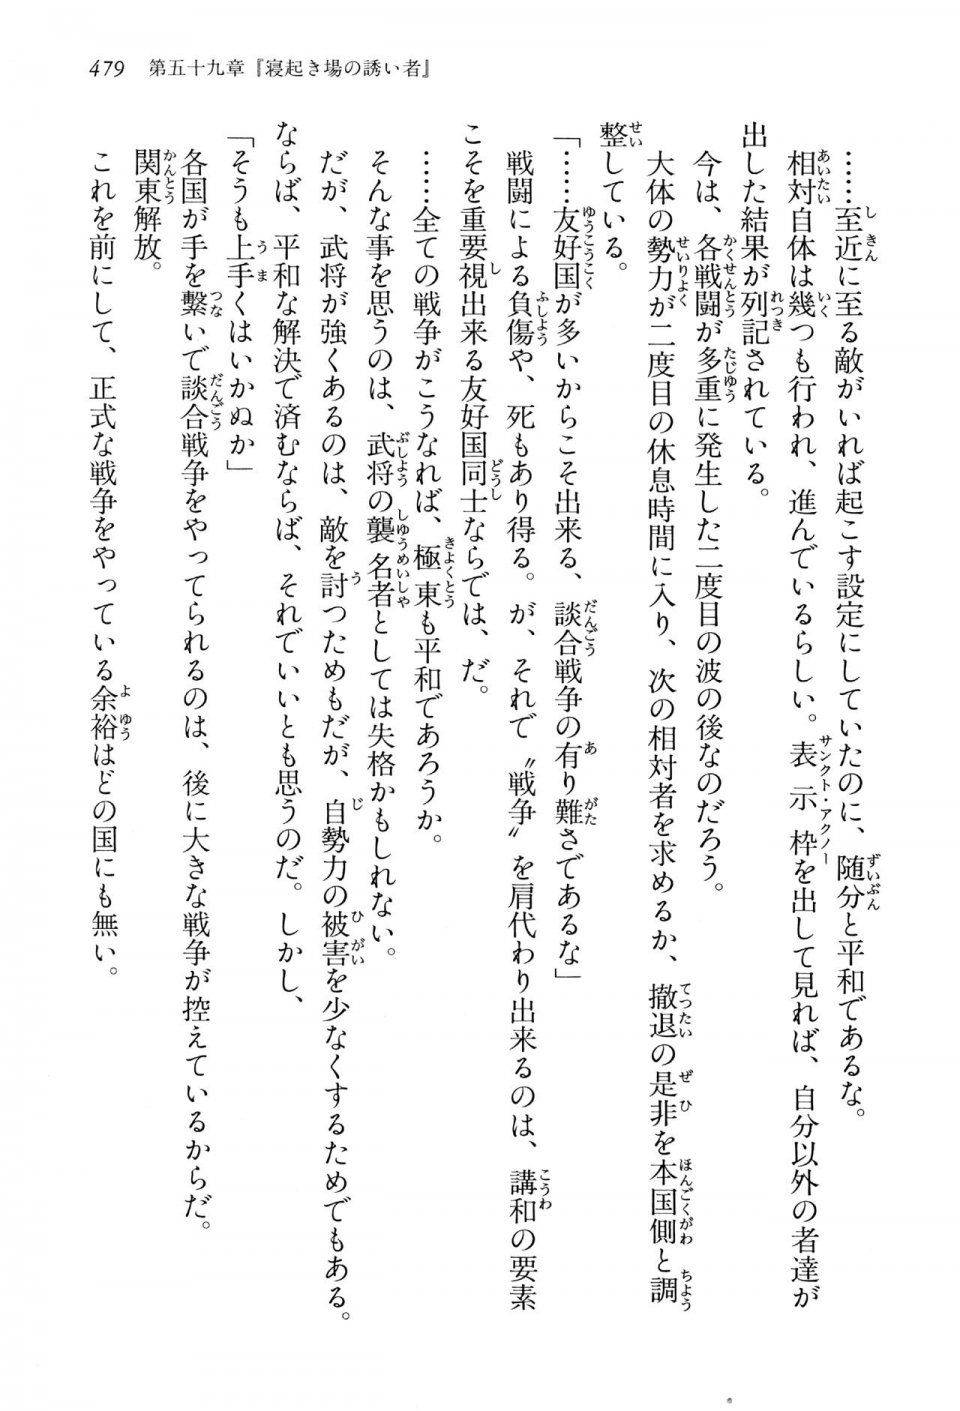 Kyoukai Senjou no Horizon LN Vol 15(6C) Part 1 - Photo #479